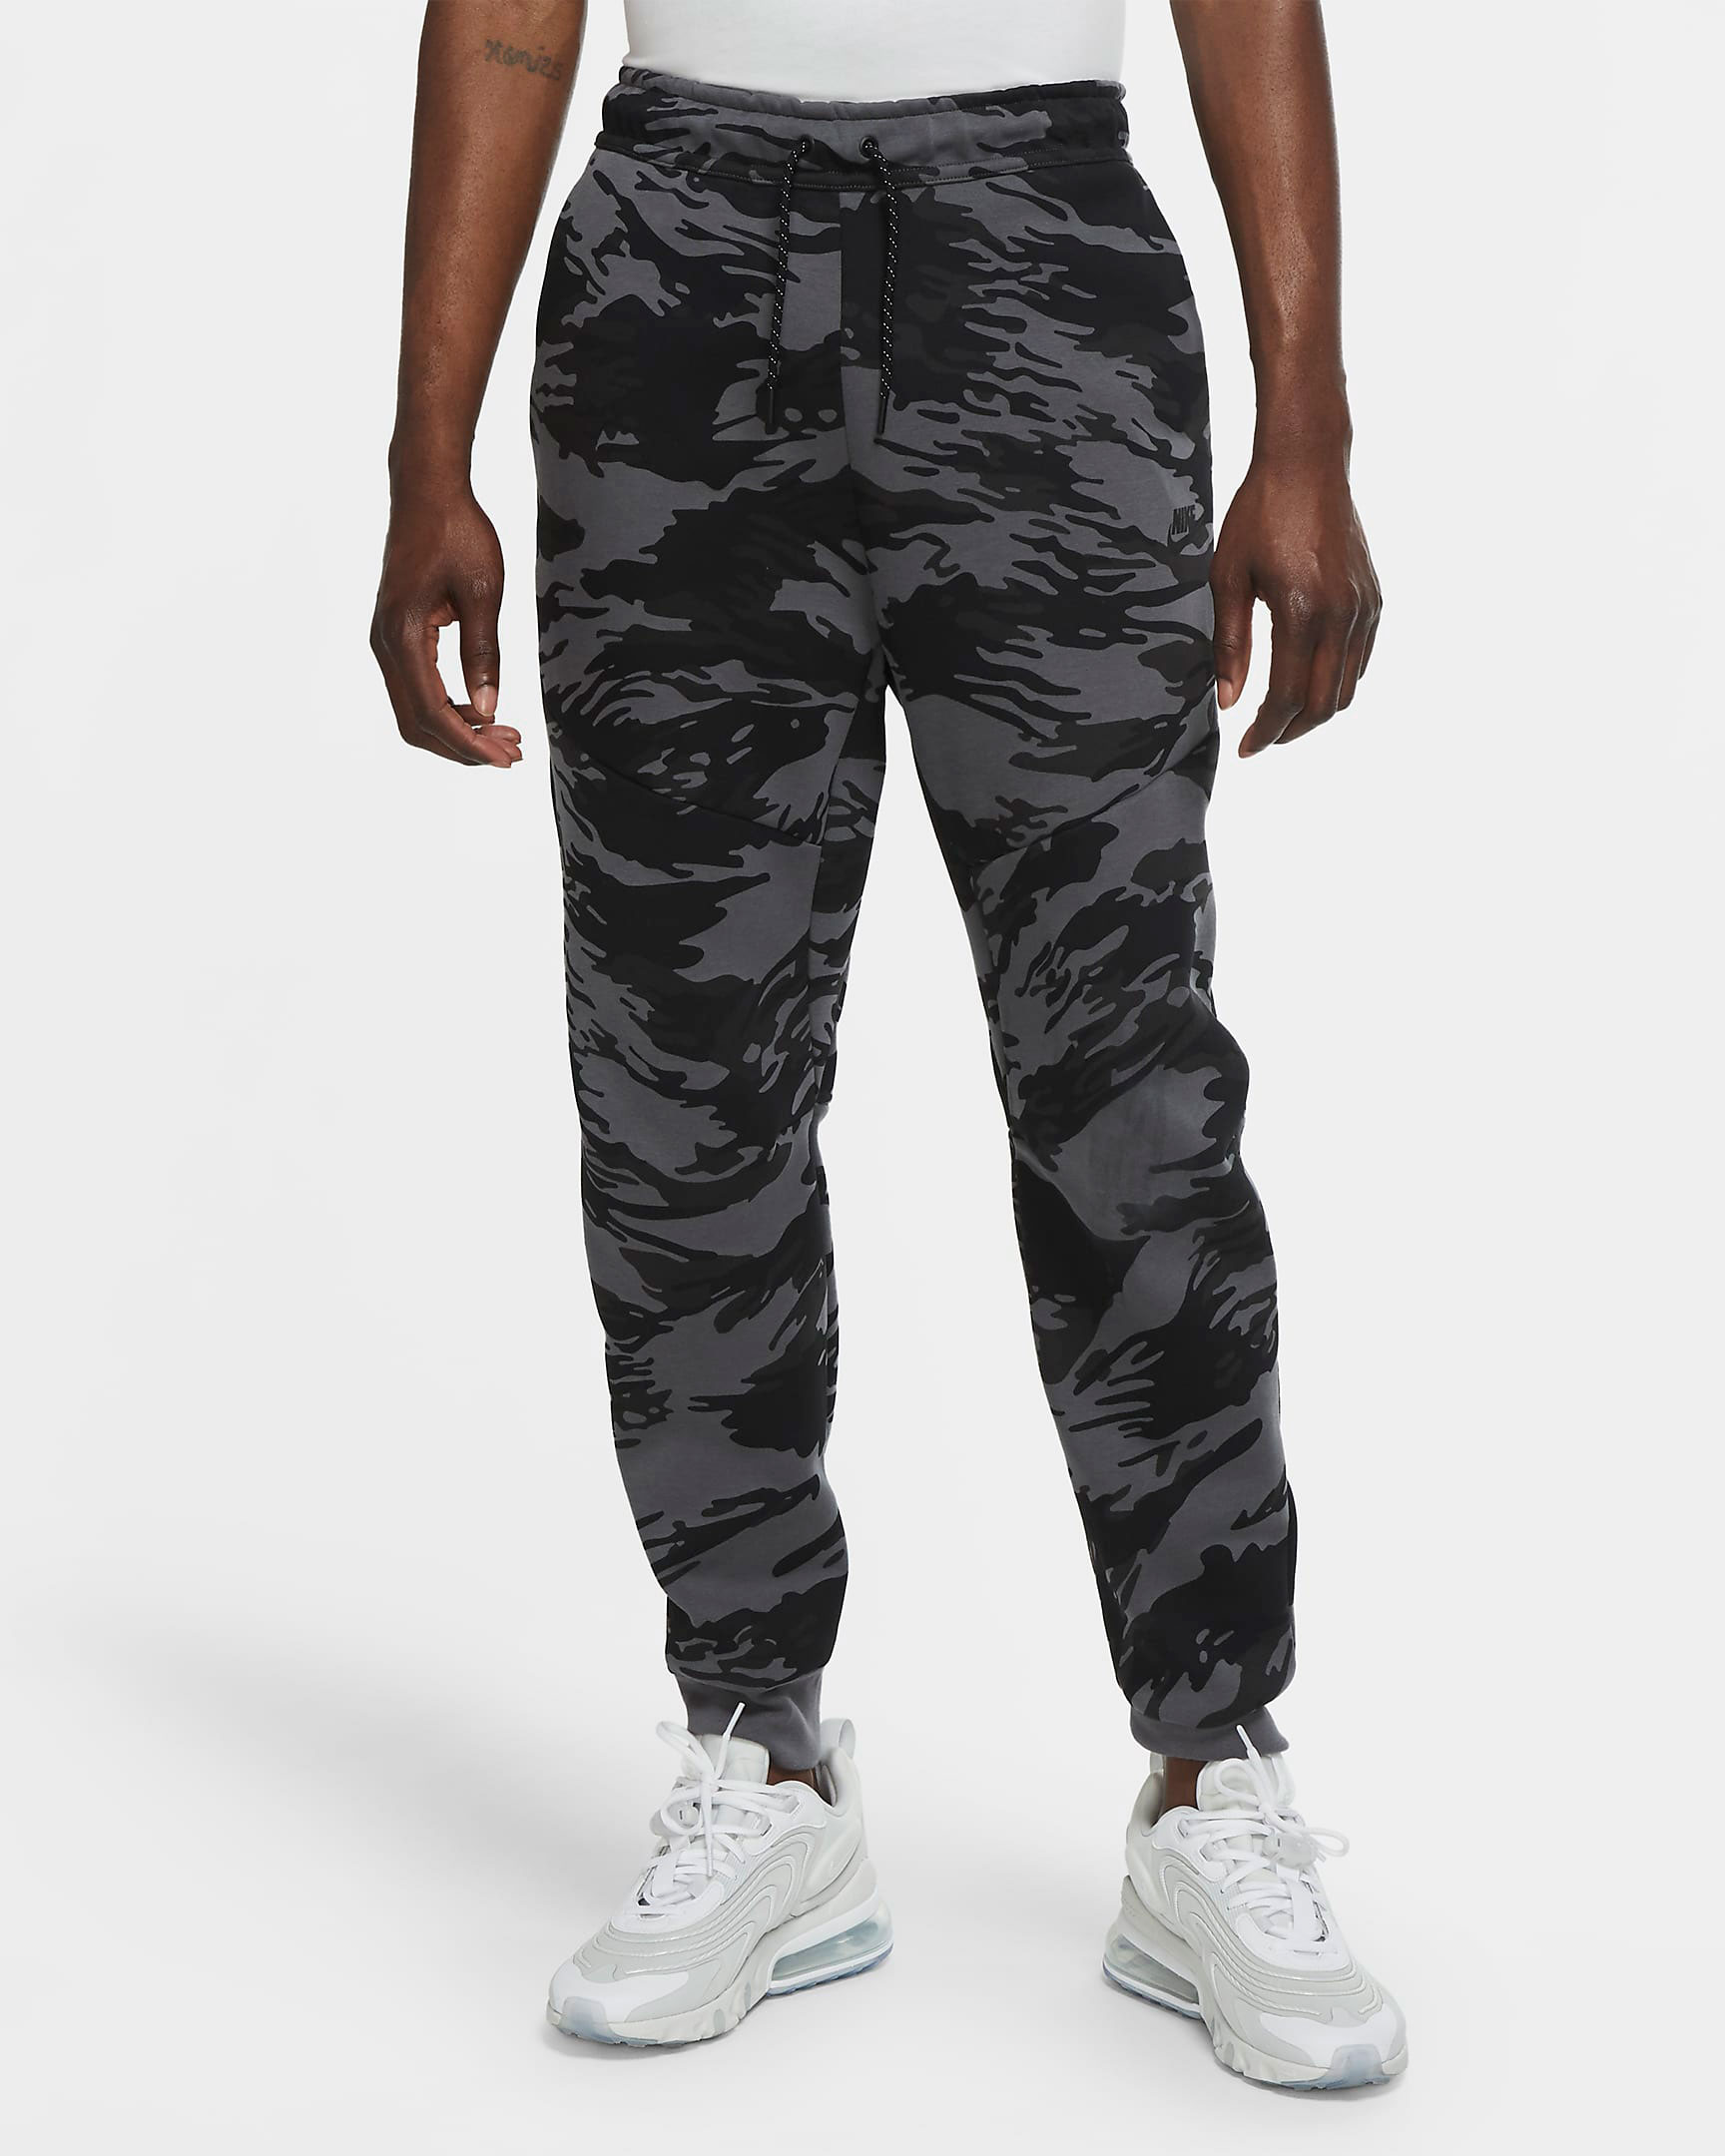 nike-tech-fleece-camo-black-grey-jogger-pants